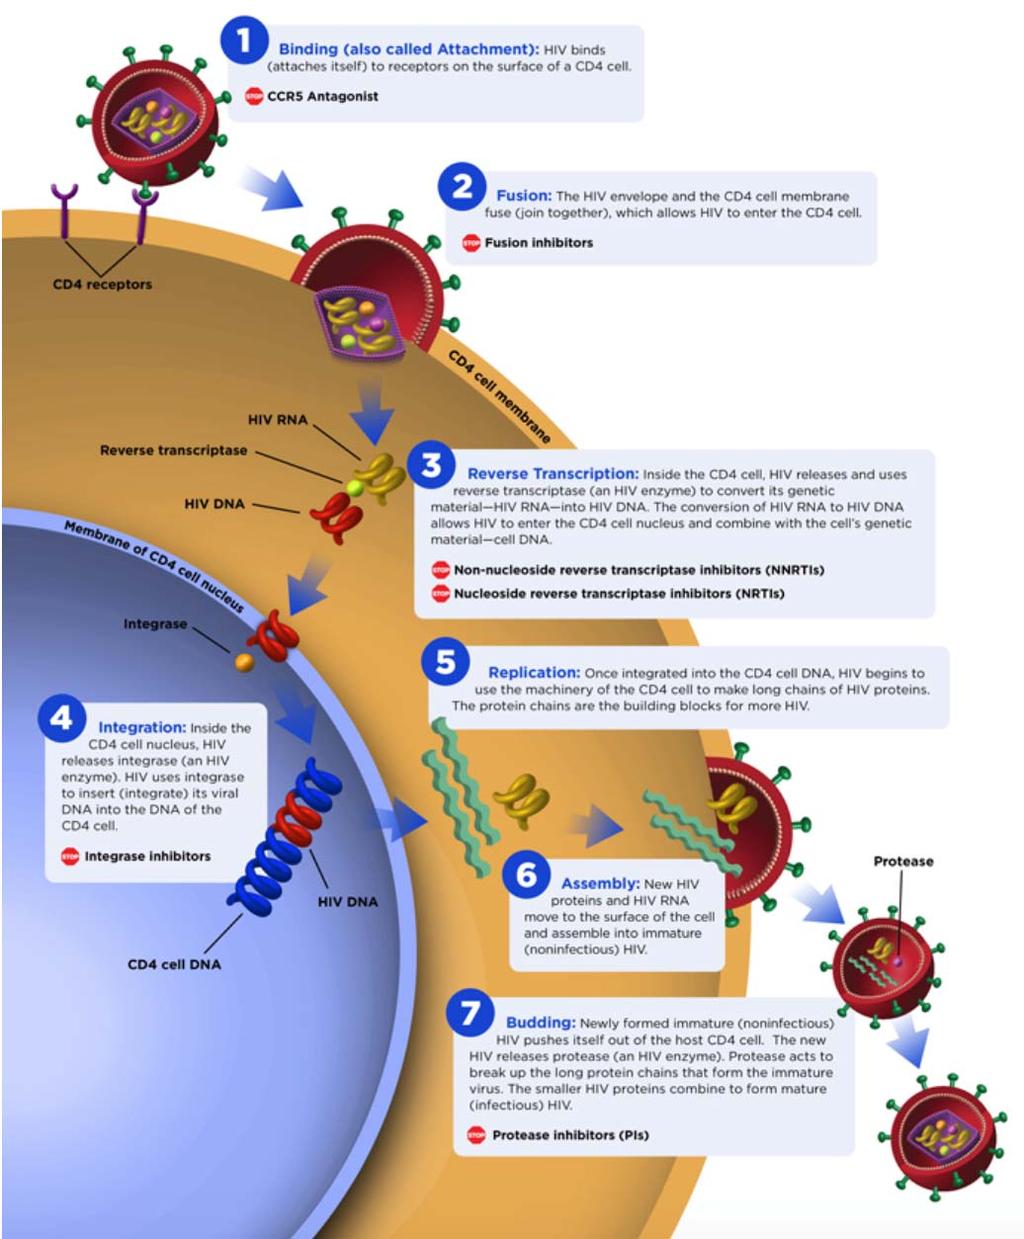 Human Immunodeficiency Virus 1. Binding: CCR5 antagonist 2. Fusion: Fusion inhibitor 3. Reverse Transcription: NNRTIs & NRTIs 4. Integration: INSTIs 5.